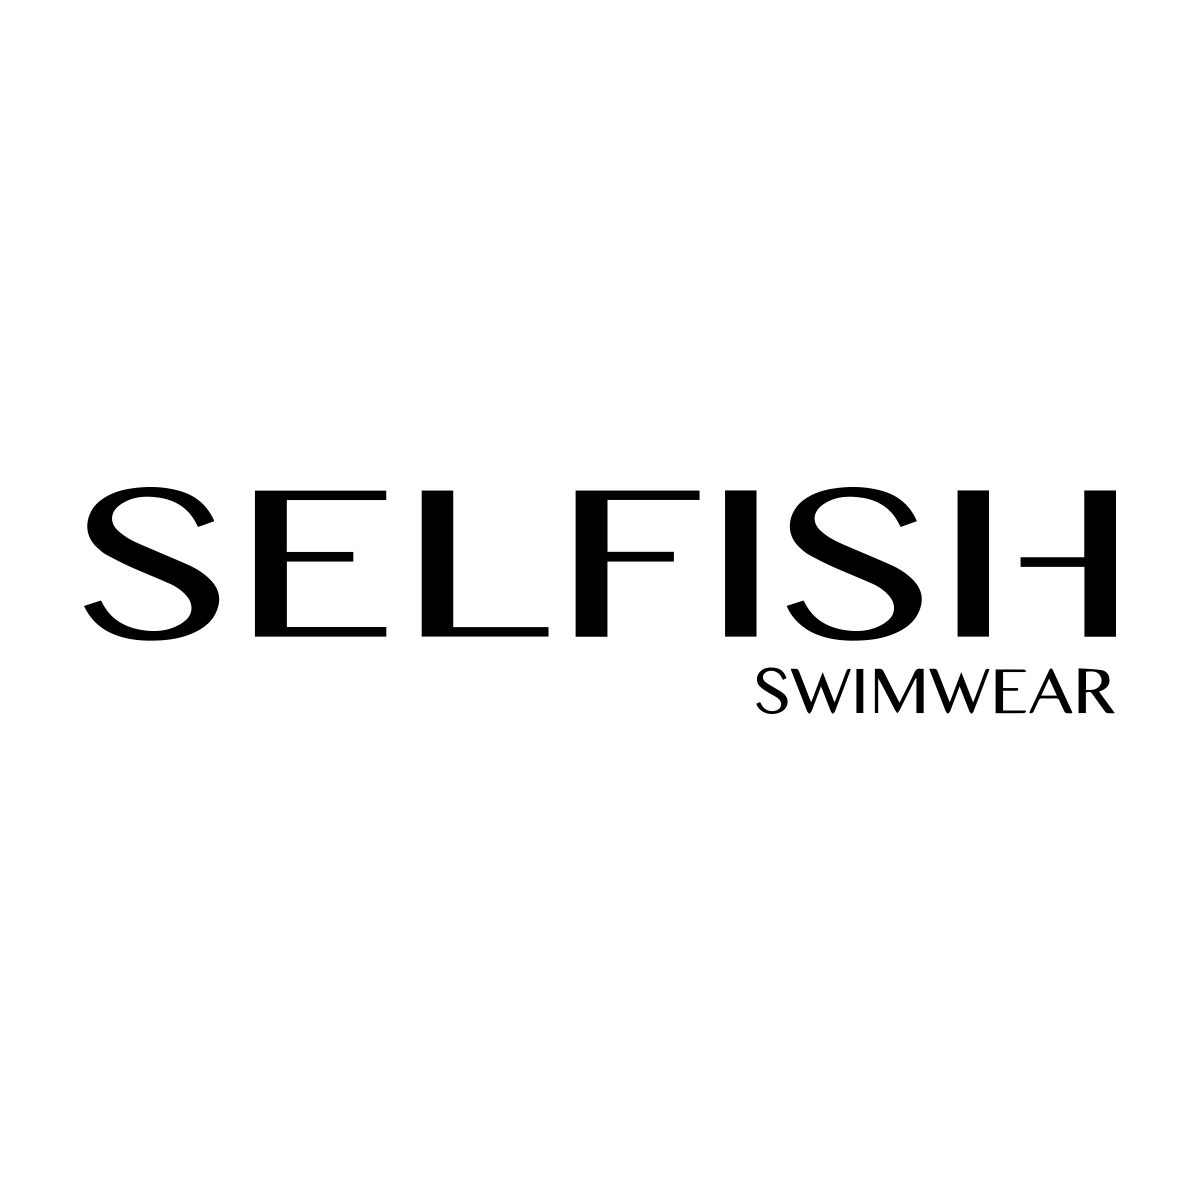 SELFISH SWIMWEAR logo